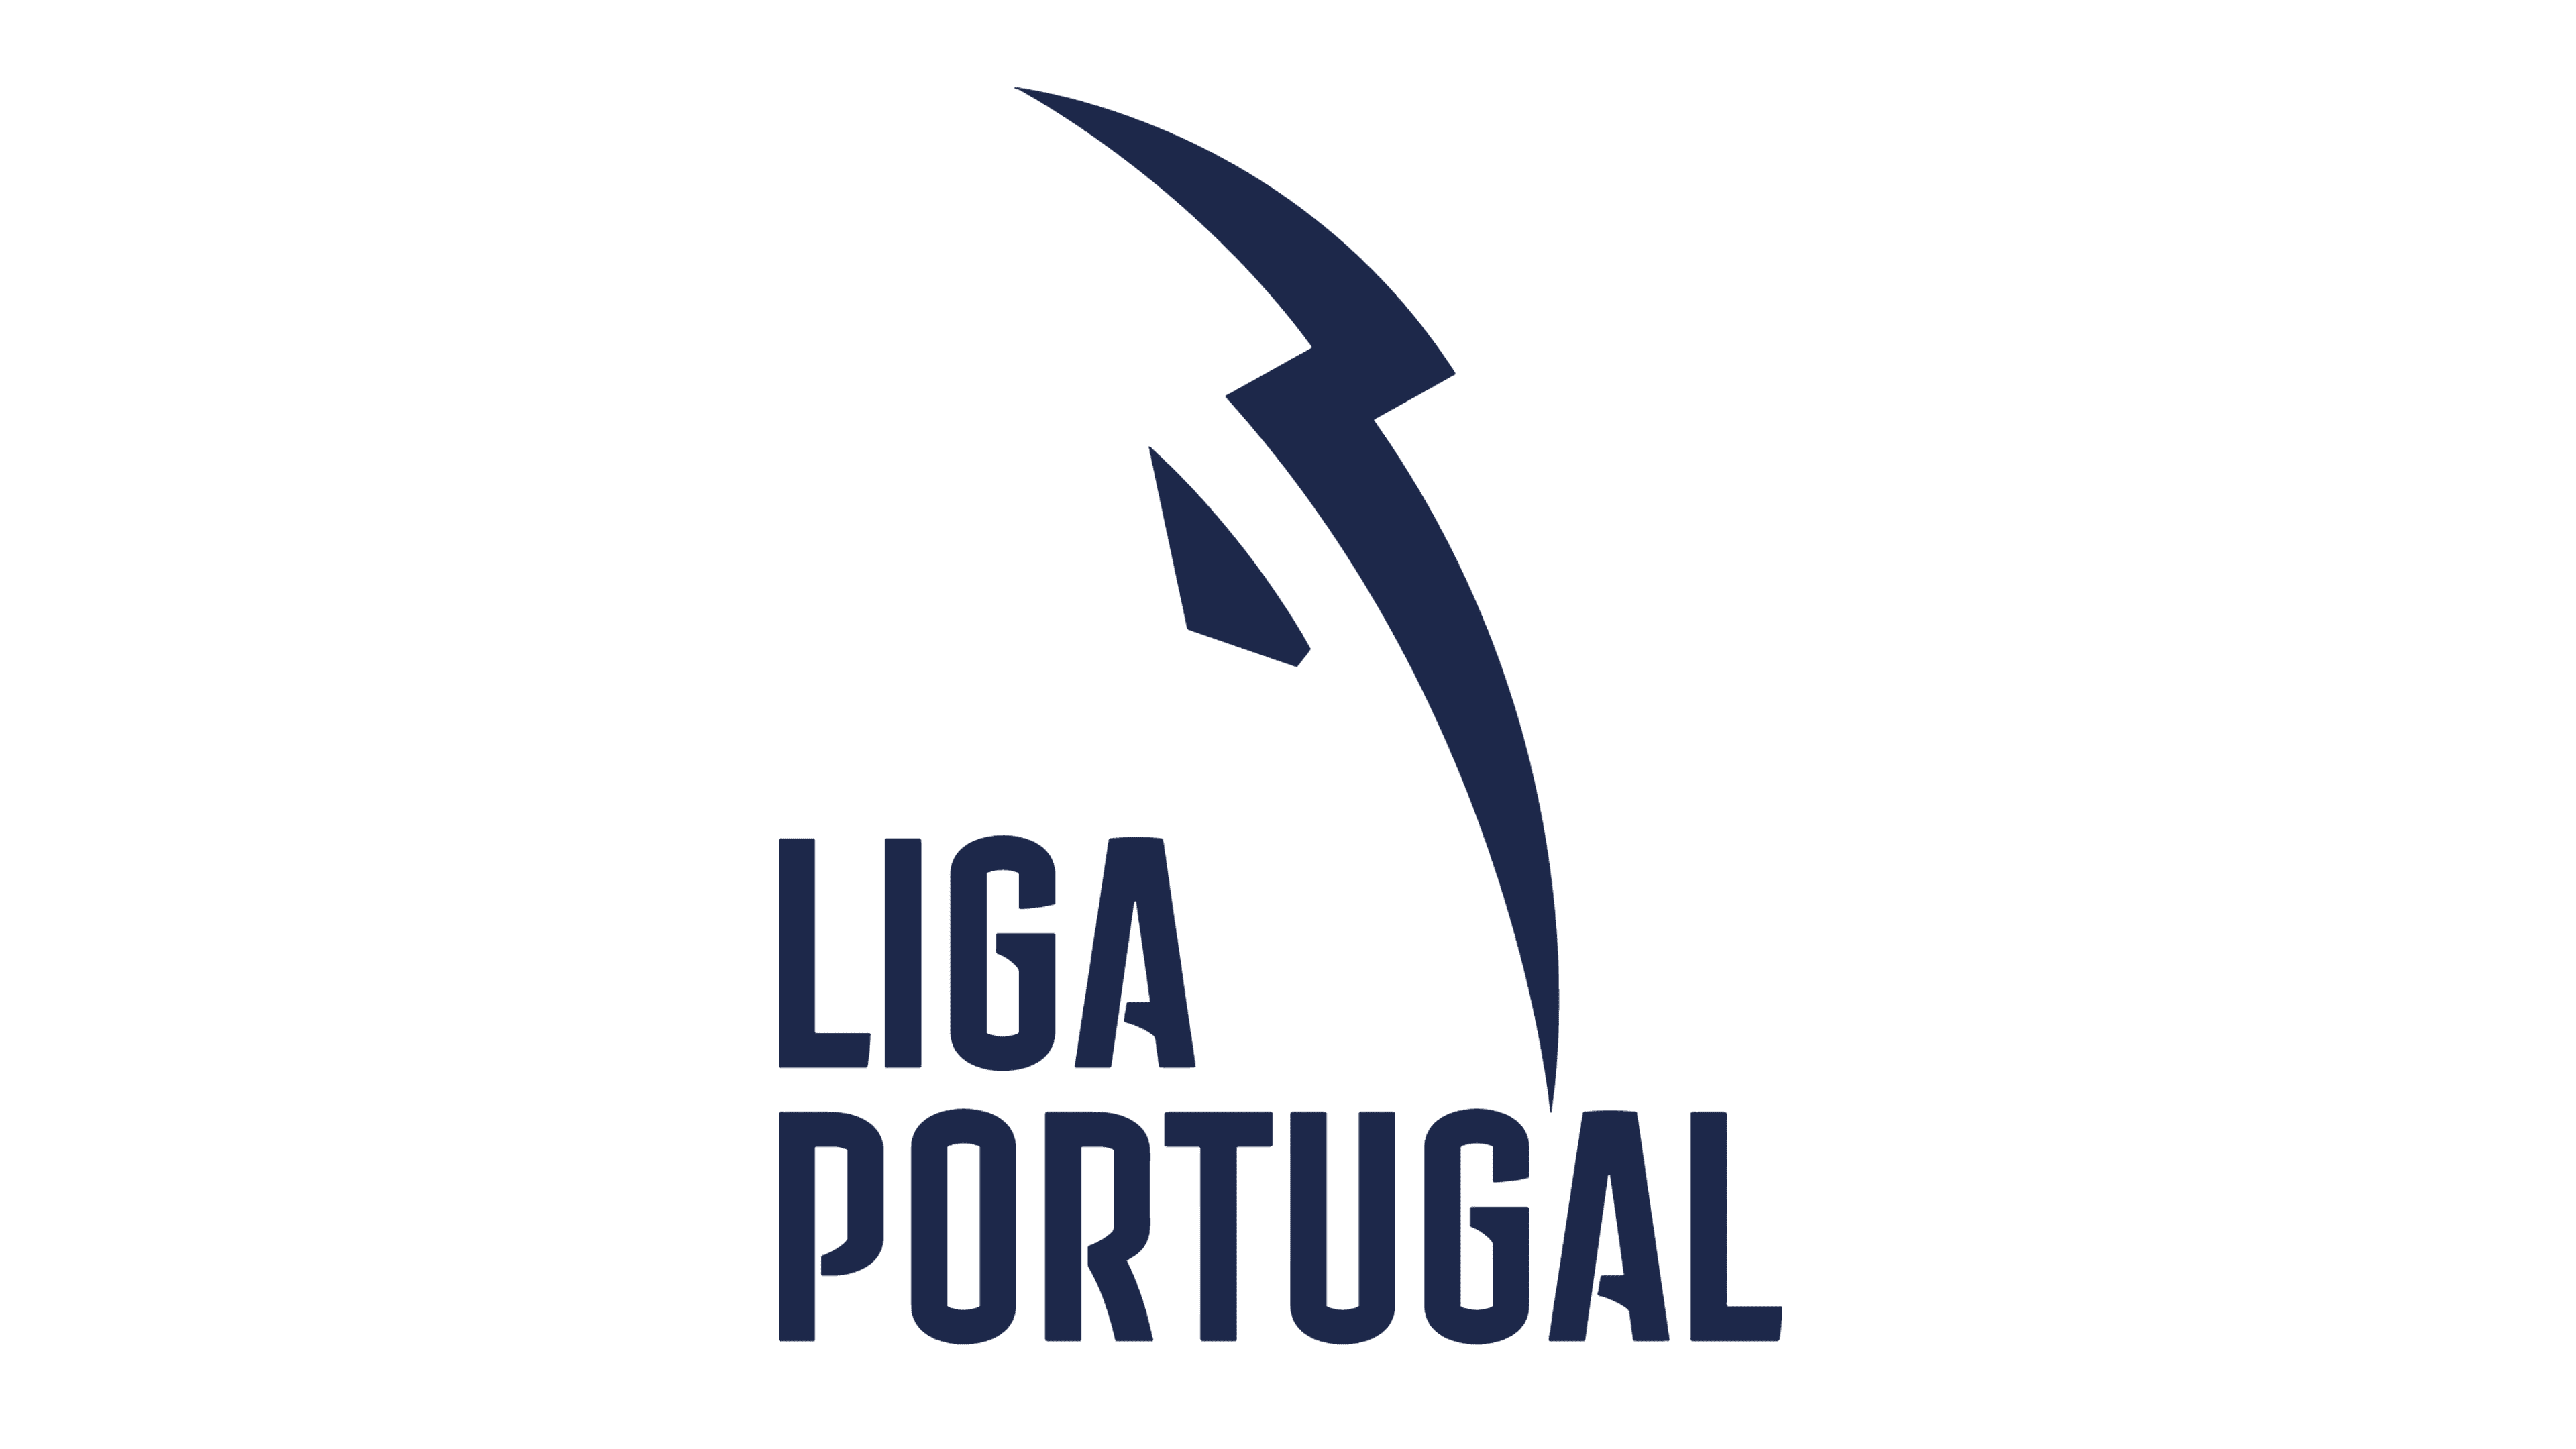 Liga TV (Portugal), Logopedia